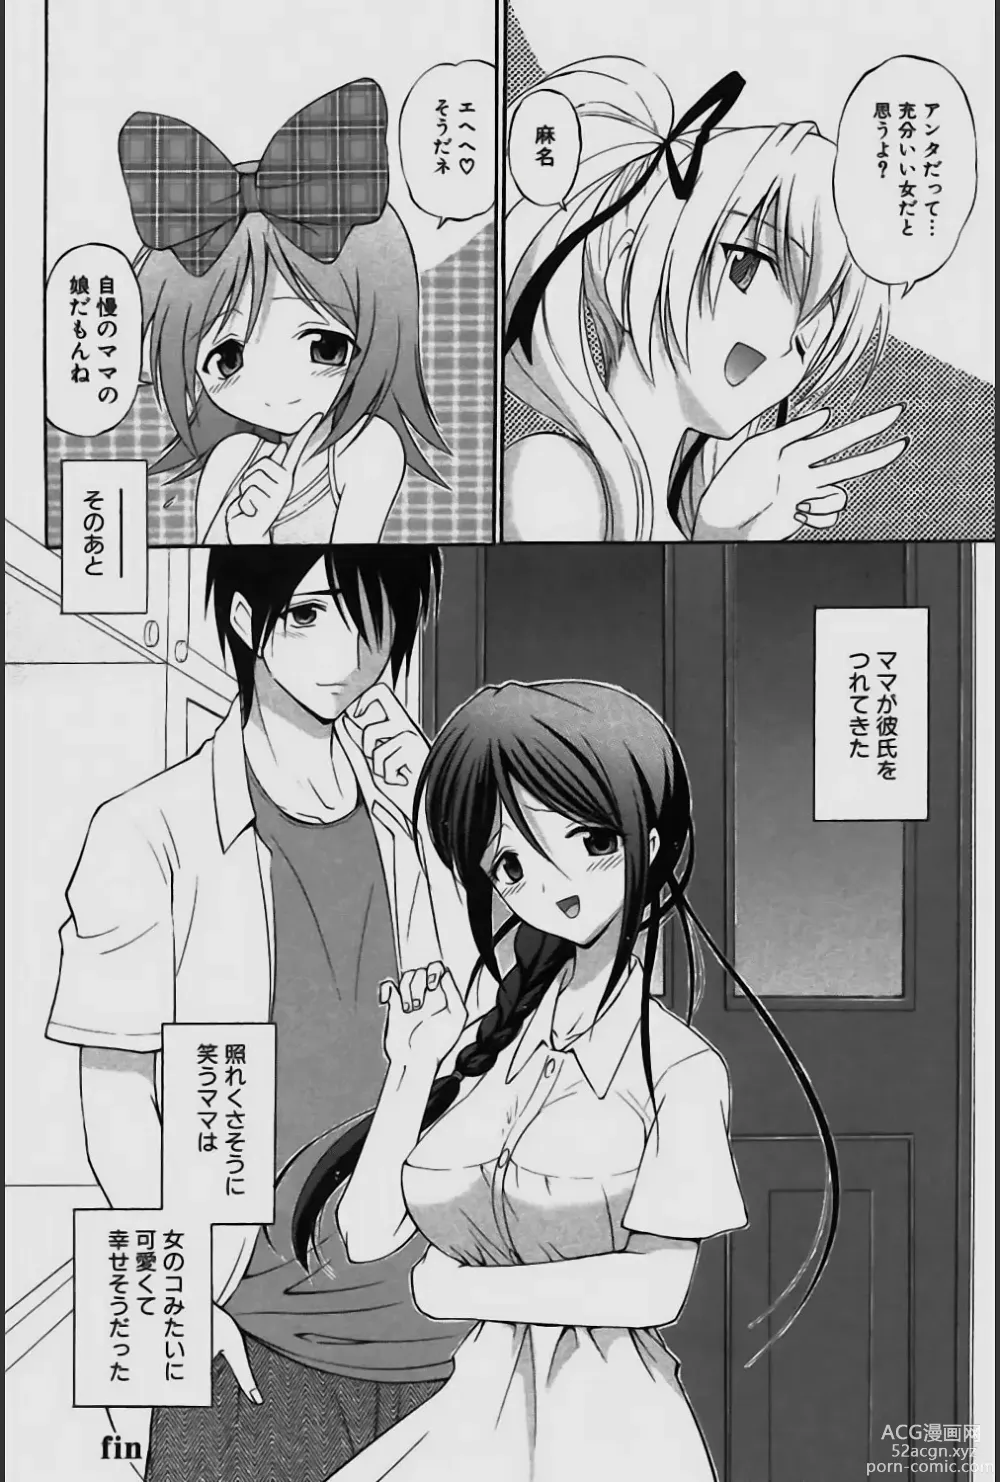 Page 196 of manga Sareruga MaMa